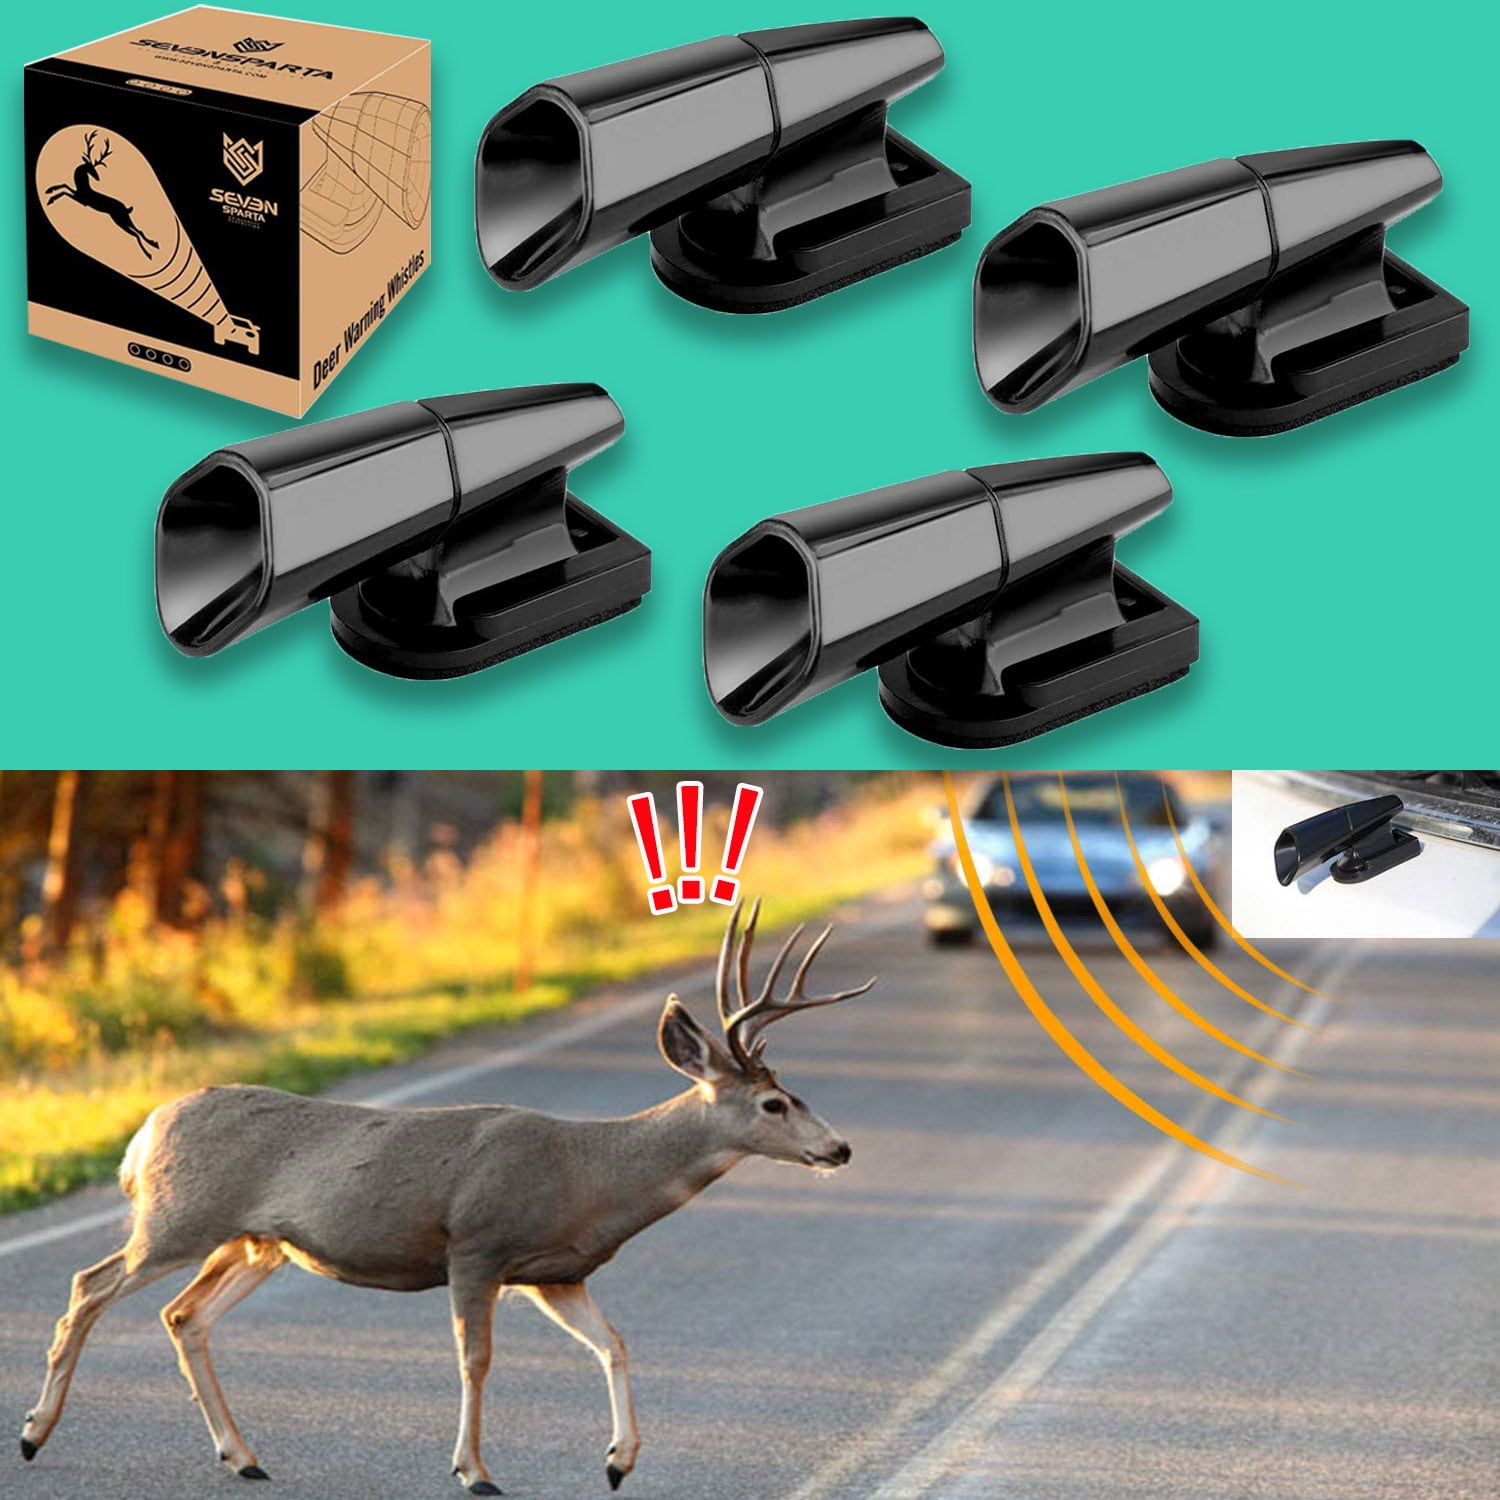 Seven Sparta Car Whistles Deer Warning Devices Save a Deer 4 Pack